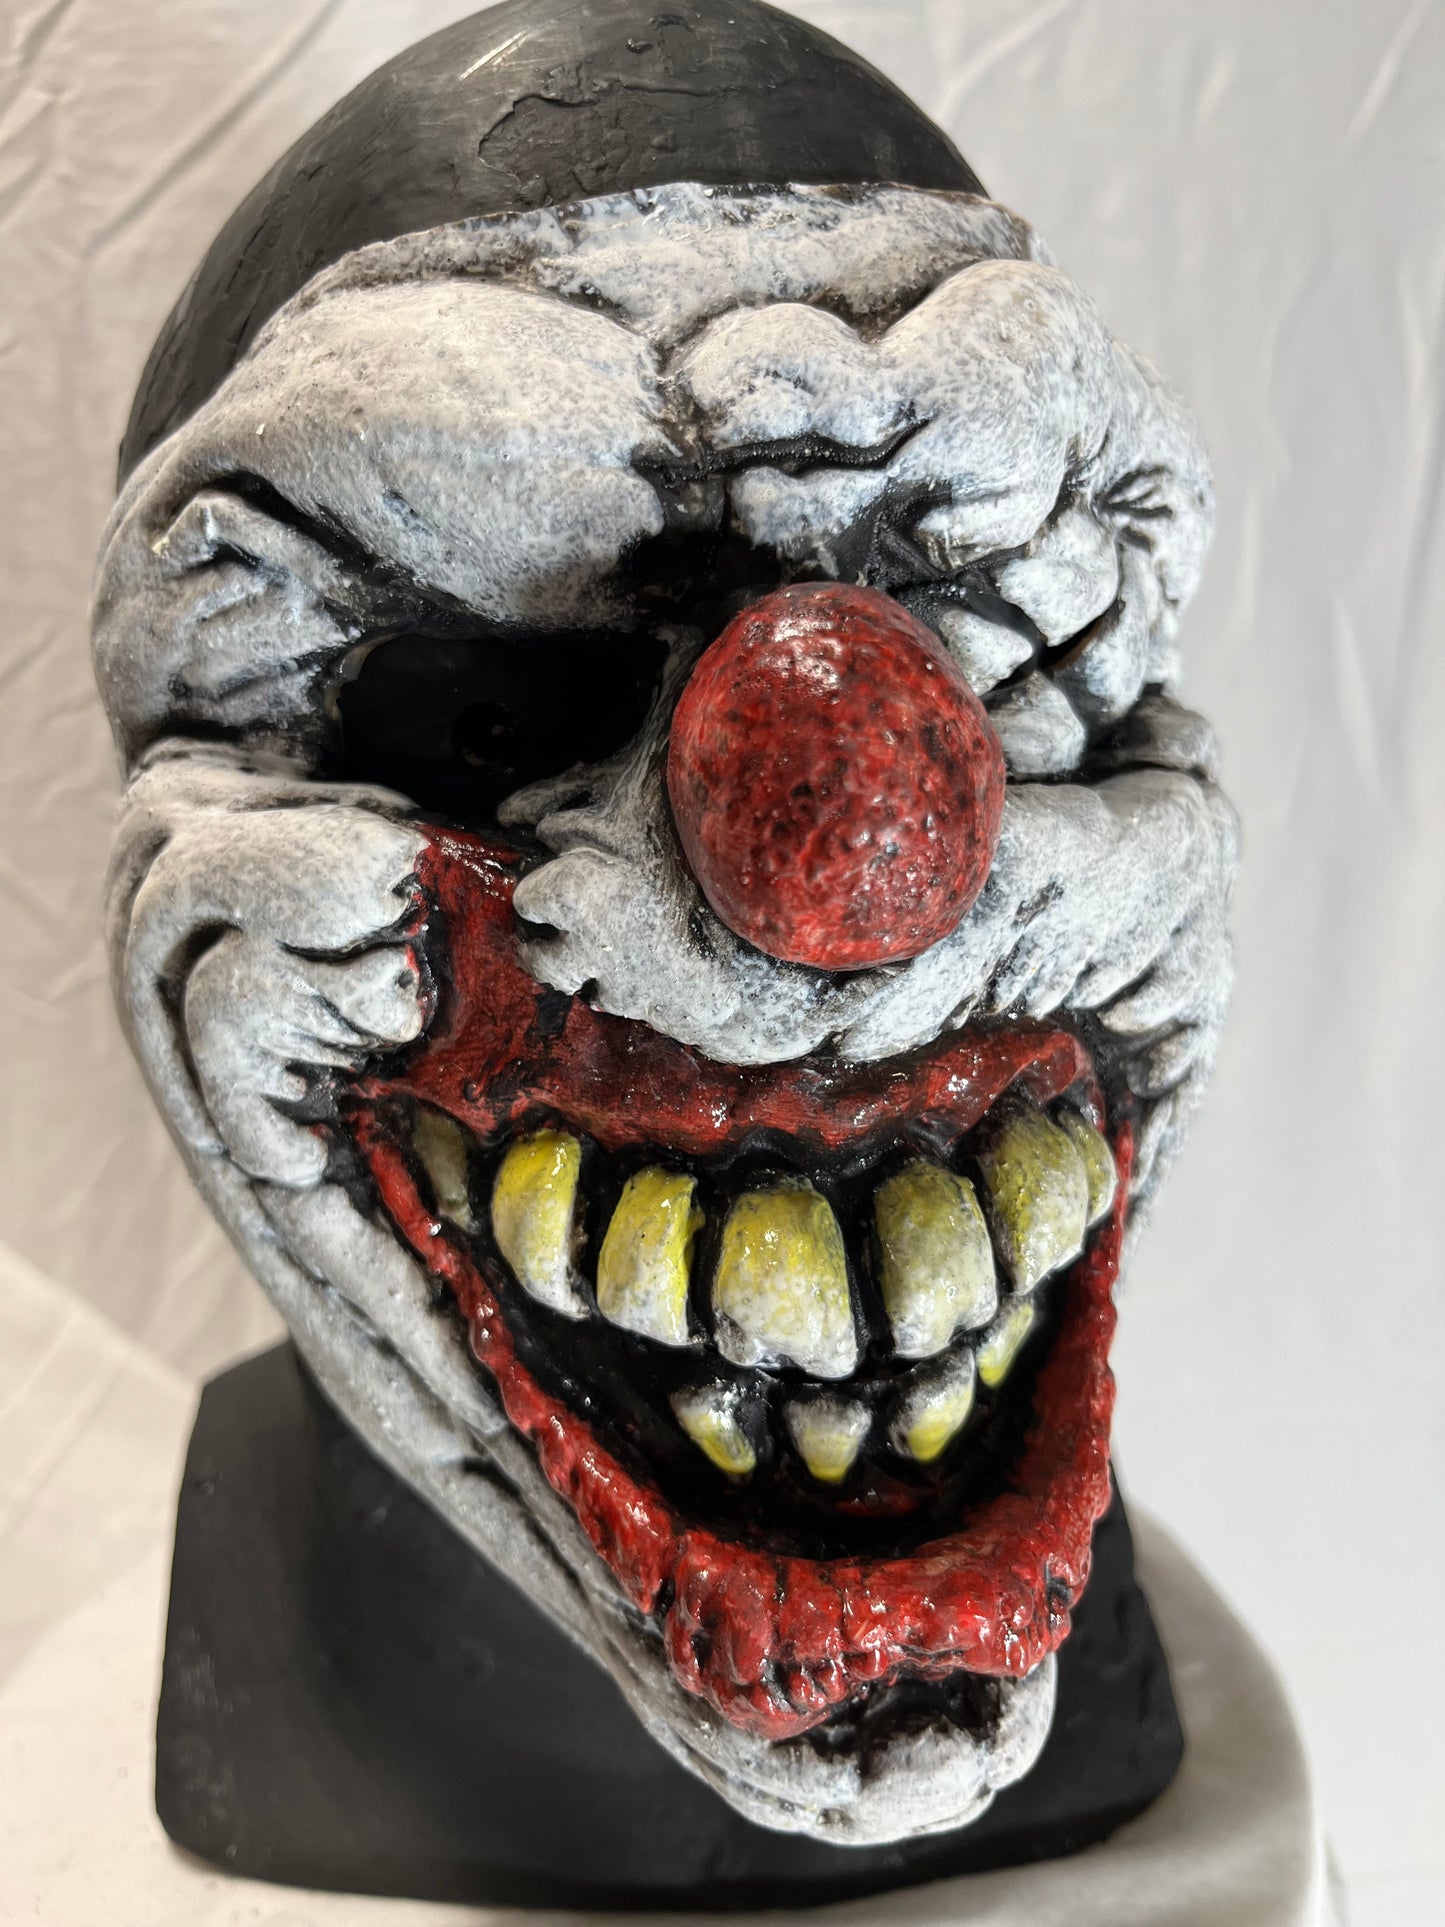 Smiling evil clown face mask